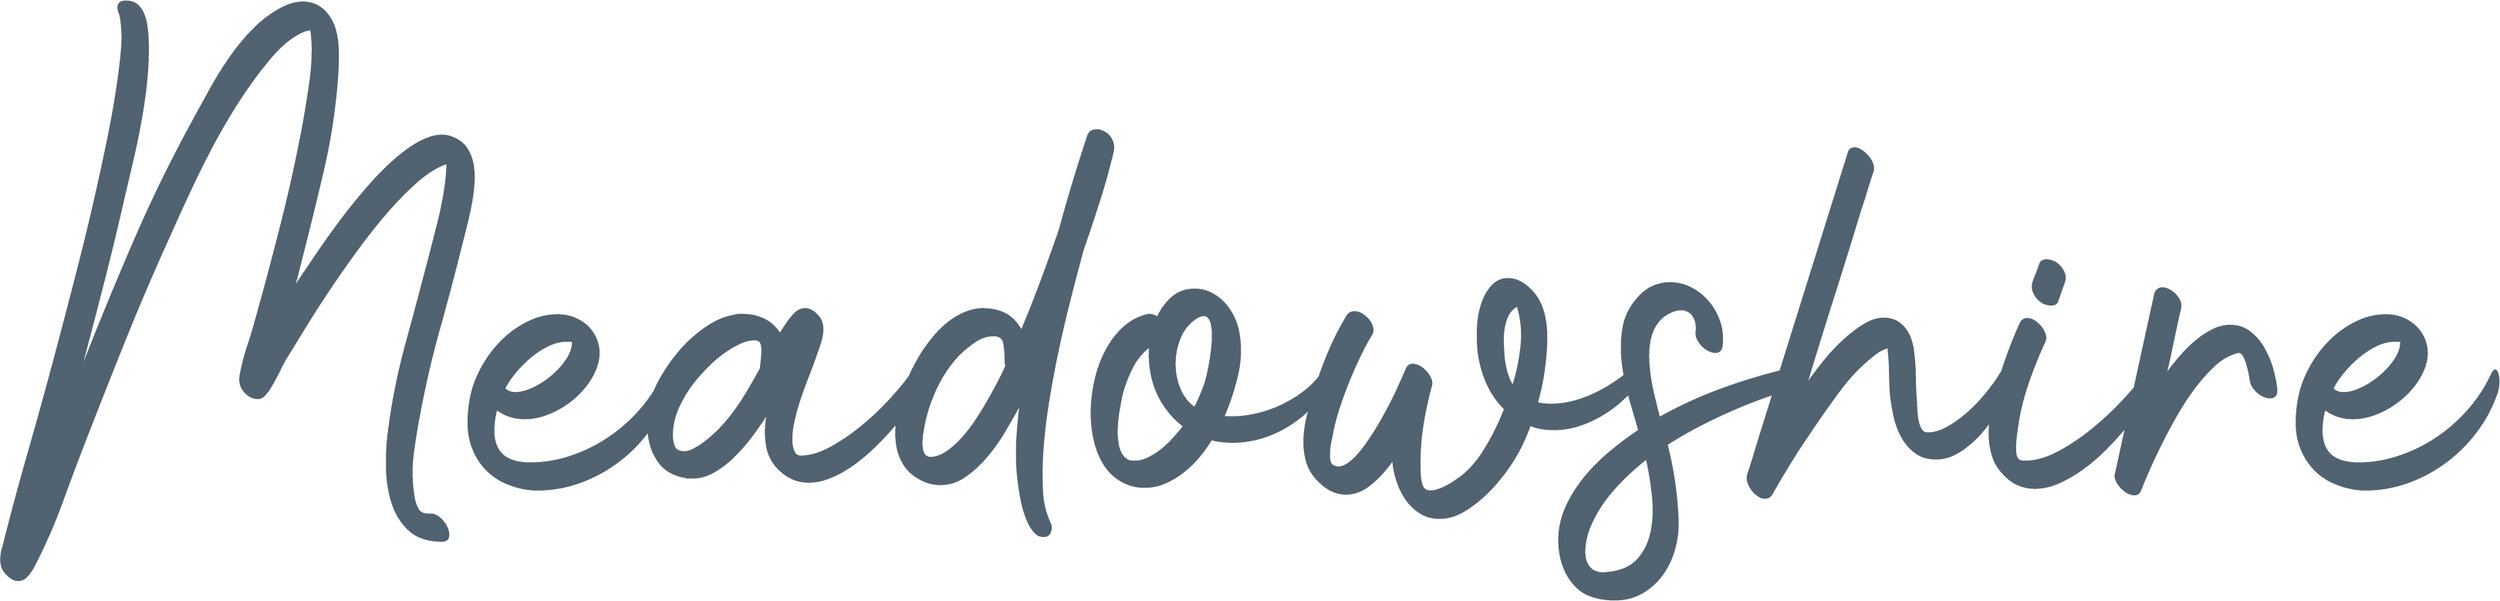 Meadowshire Logo FINAL.jpg